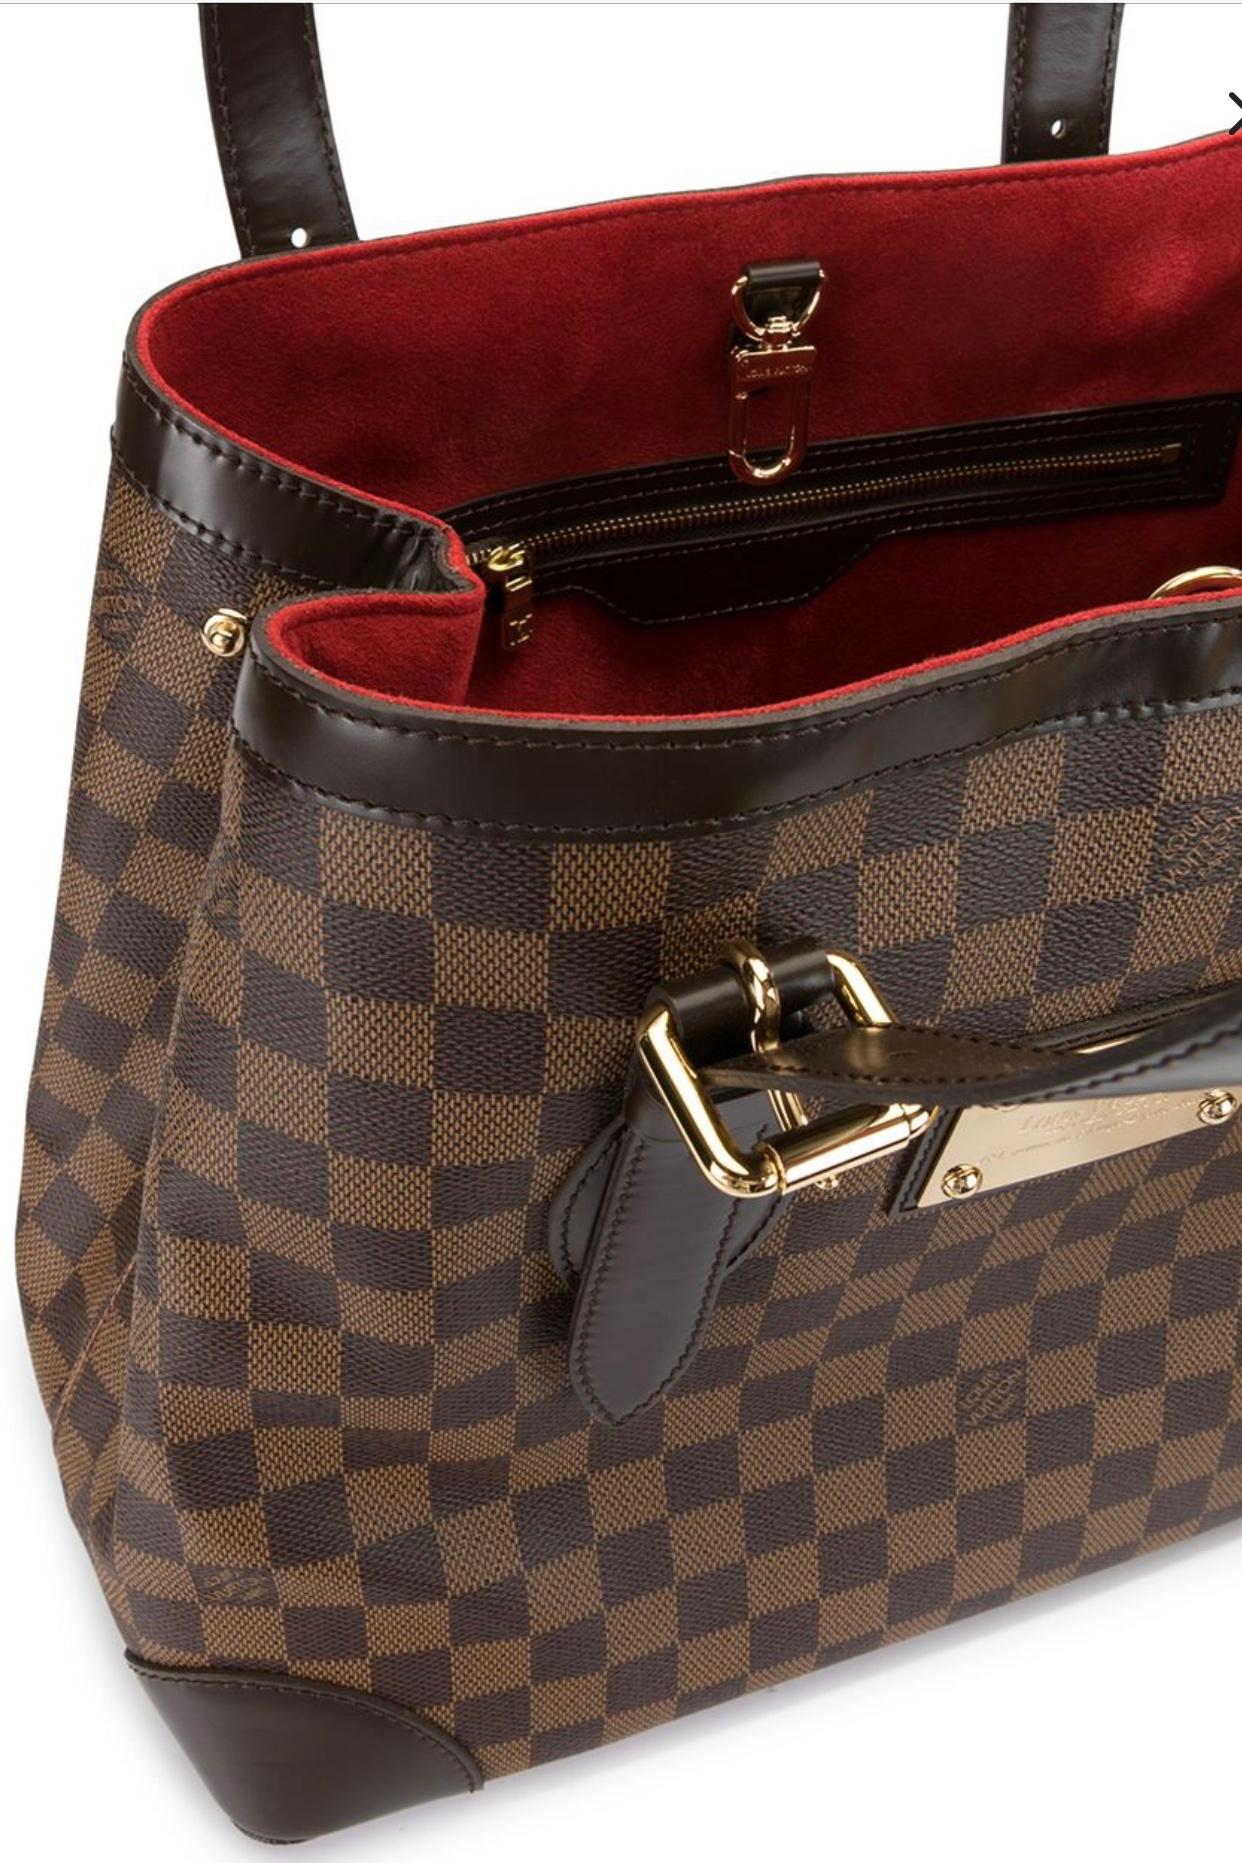 Women's Louis Vuitton Hampstead Handbag Damier Ebene GM, Golden Hardware Like New